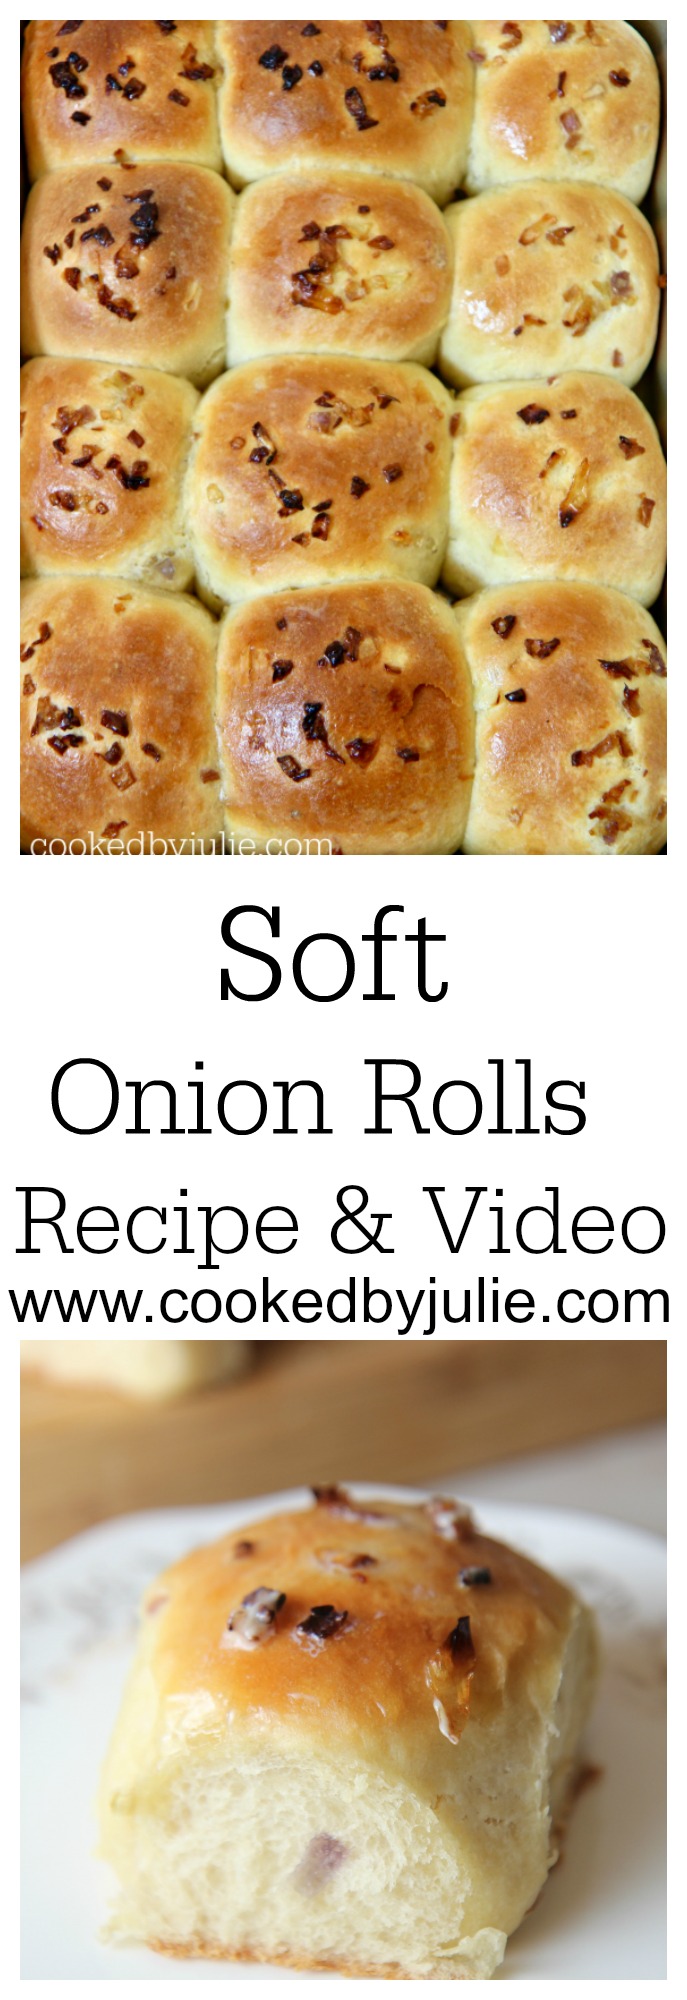 Soft Onion Rolls - Recipe & Video